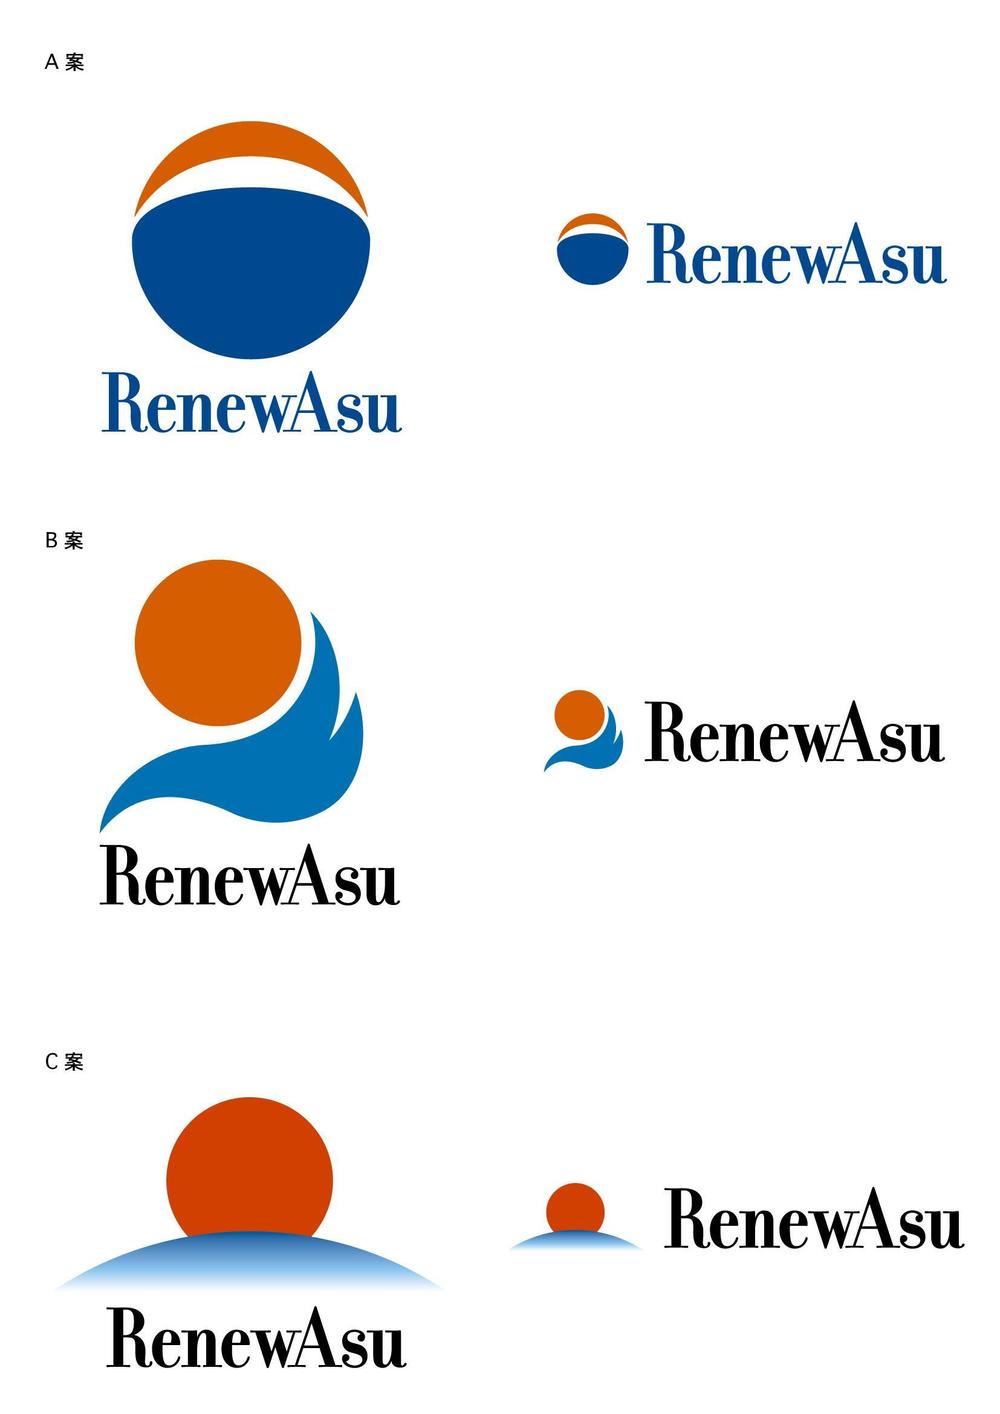 RenewAsu_A_B_C.jpg